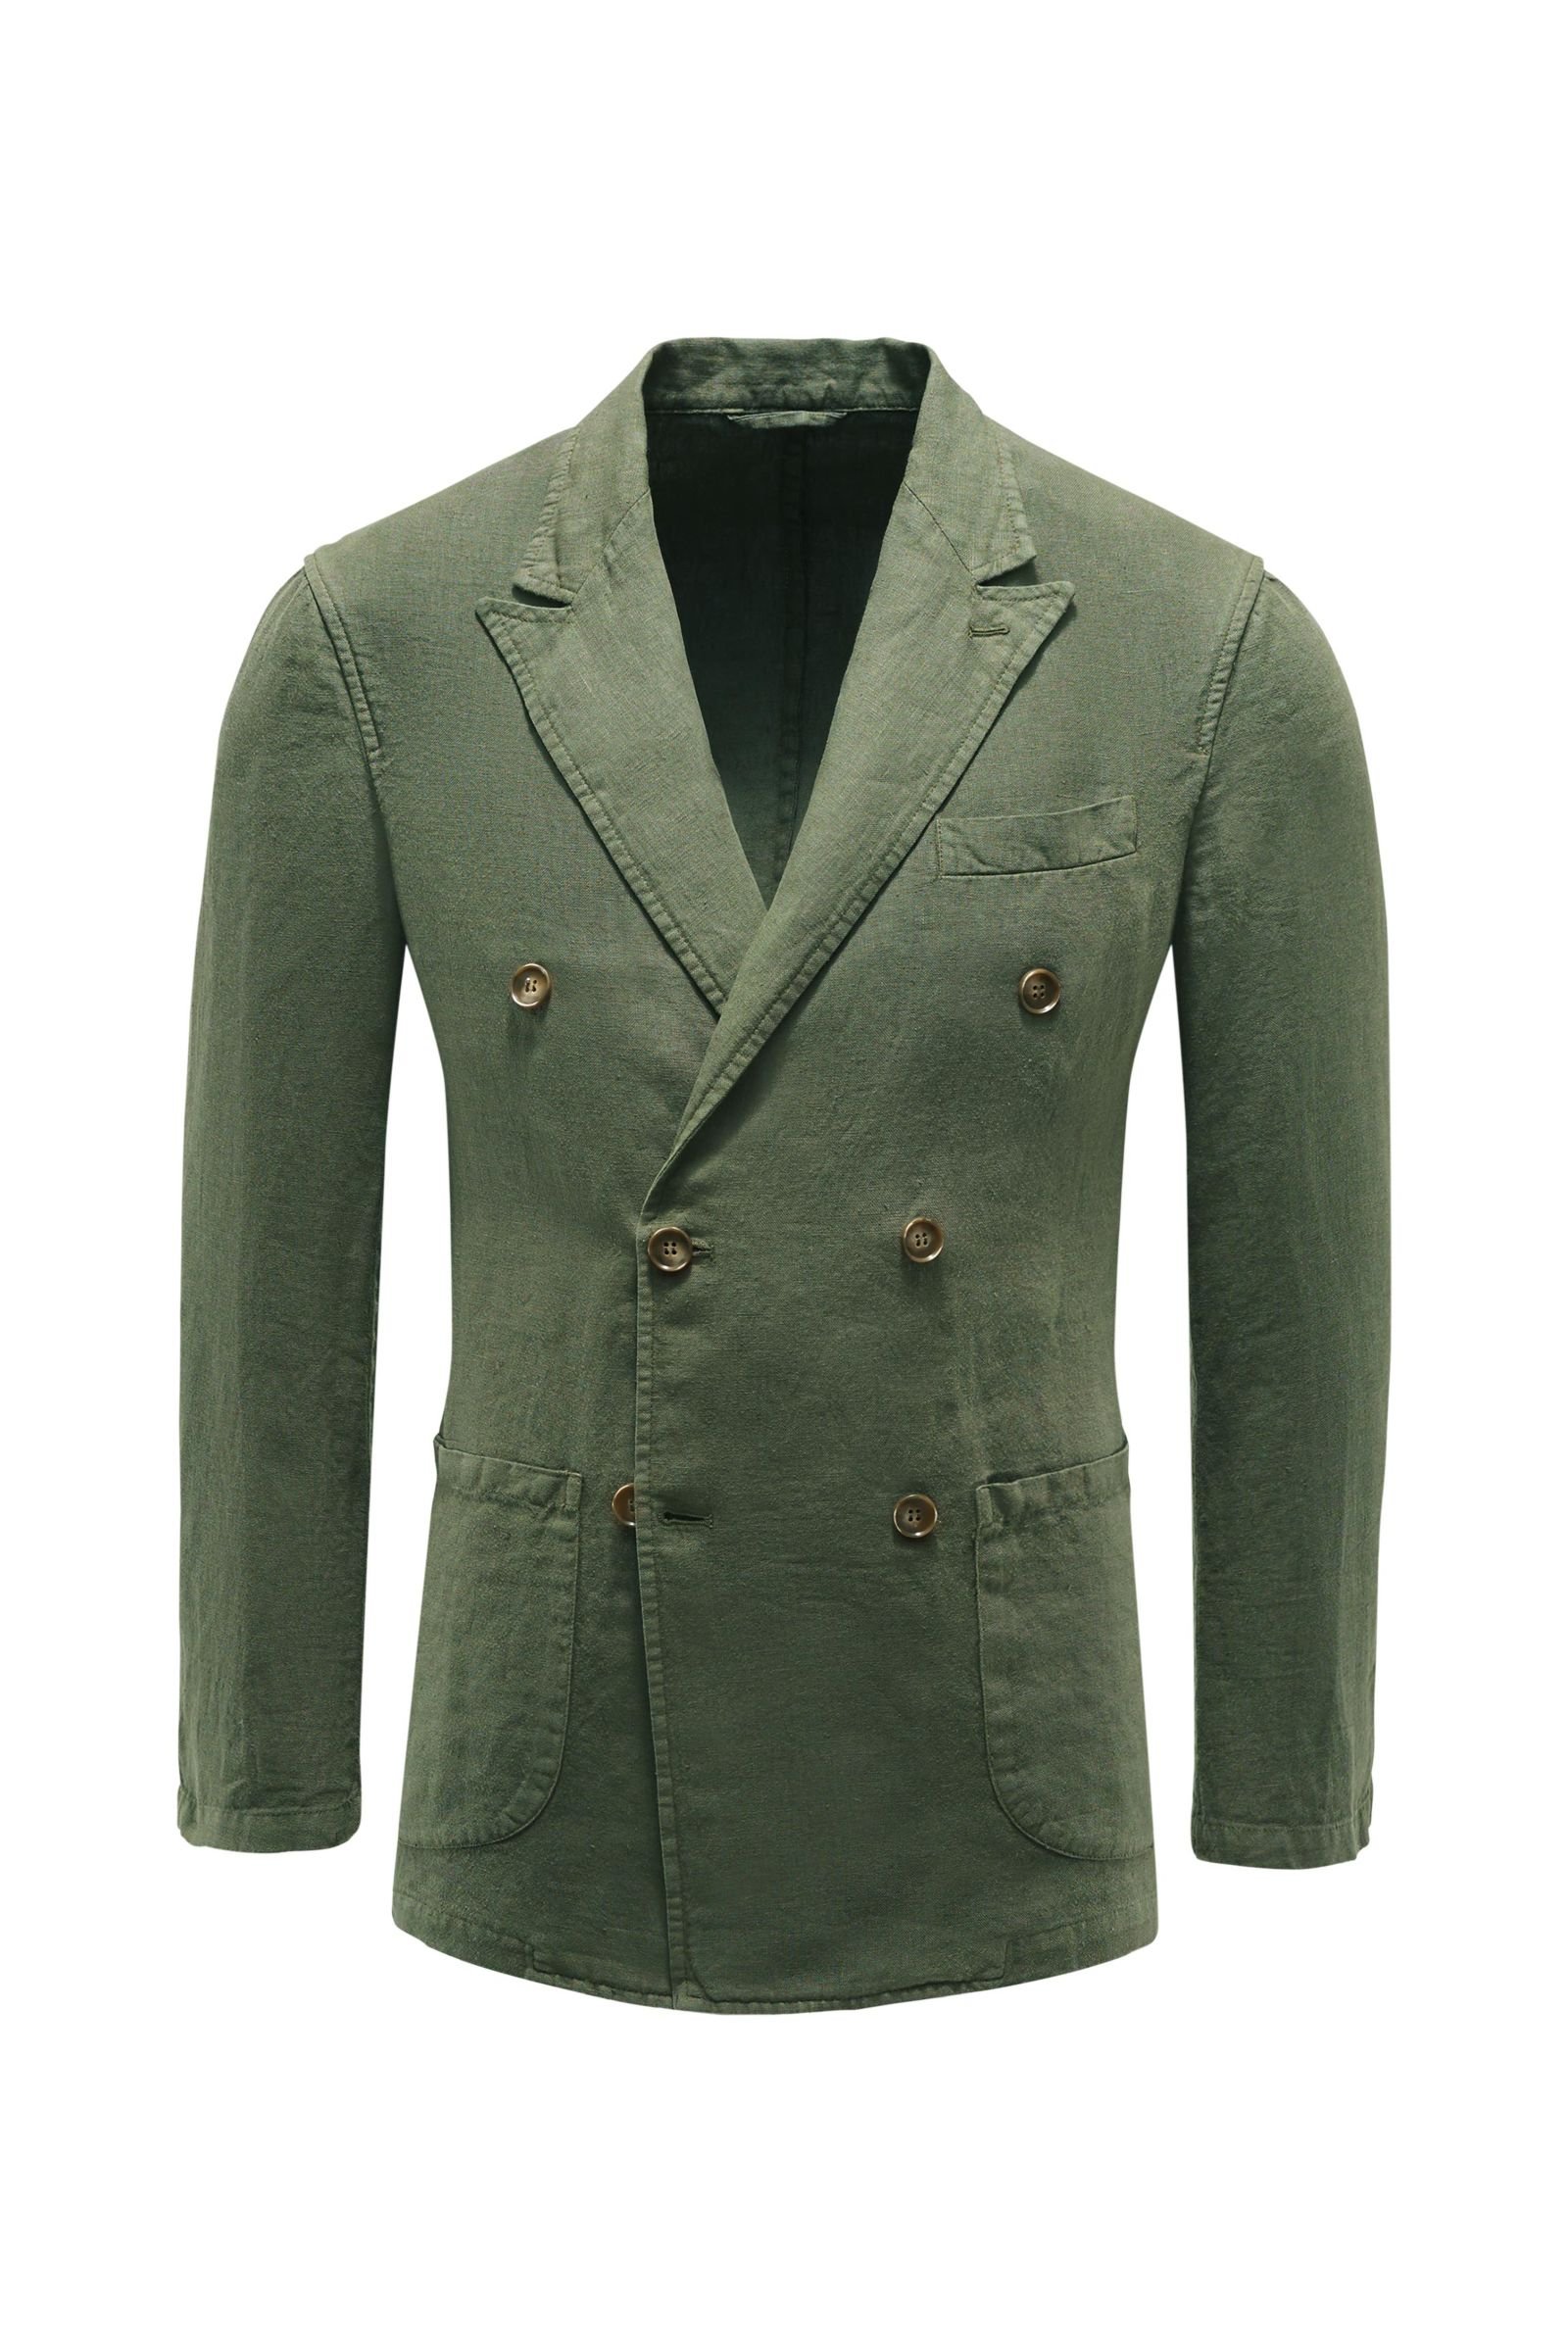 Smart-casual linen jacket 'Isola' olive